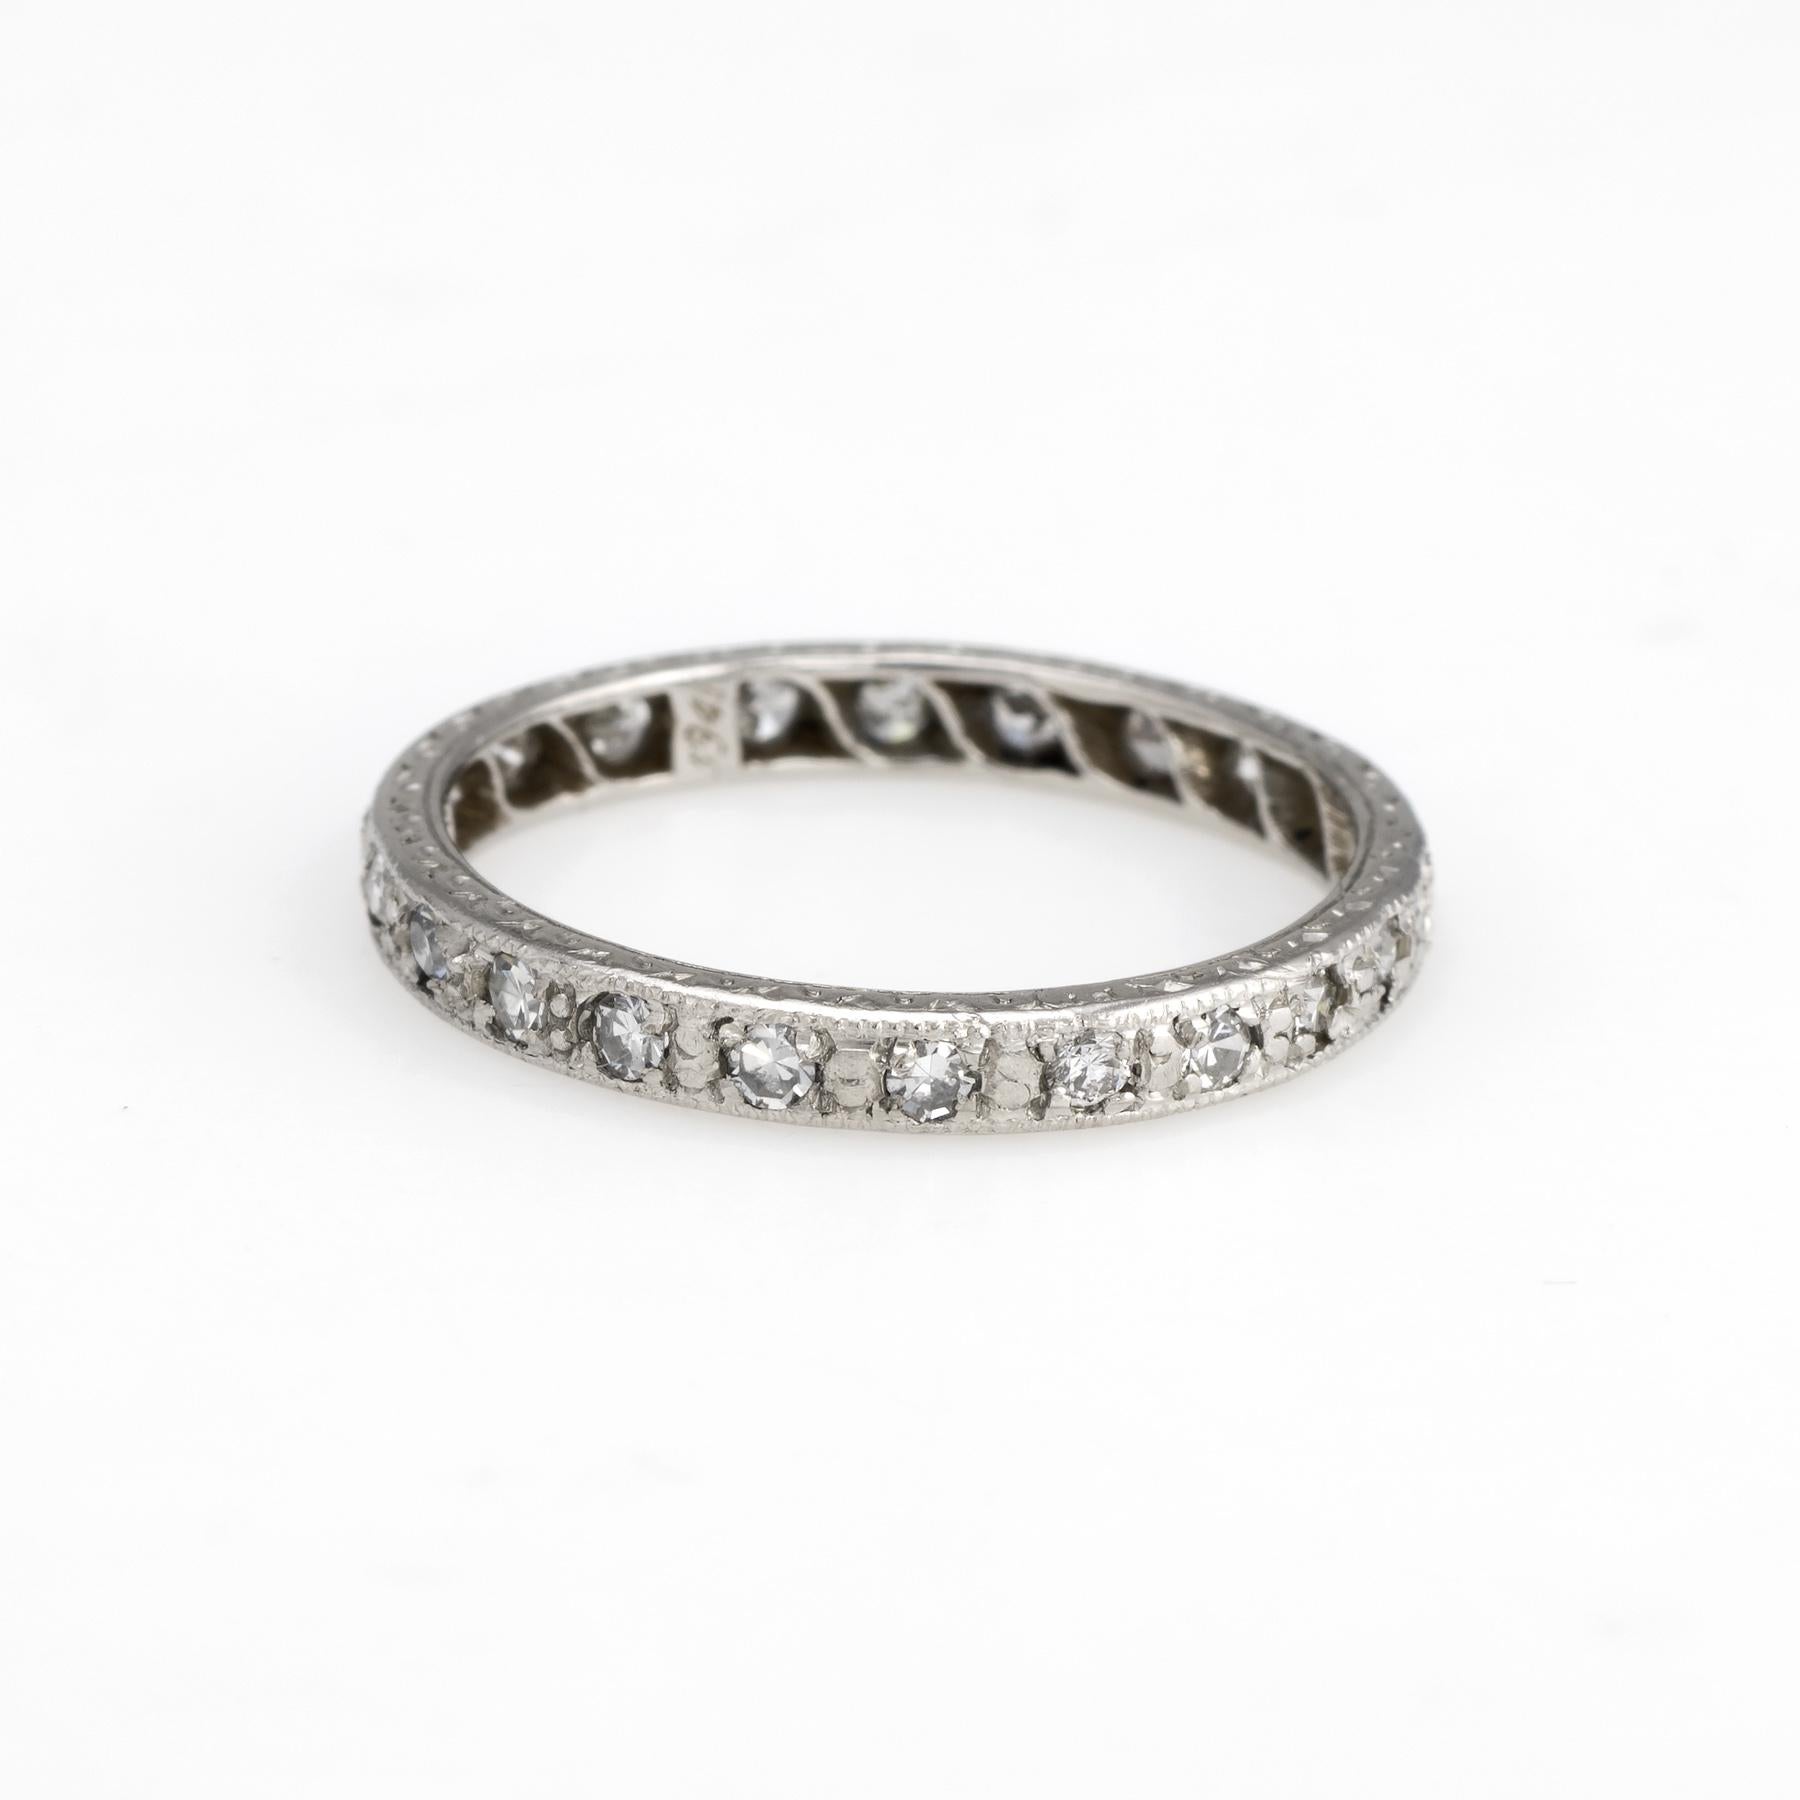 Art Deco Vintage Deco Diamond Band Platinum Wedding Ring Etched Vintage Jewelry